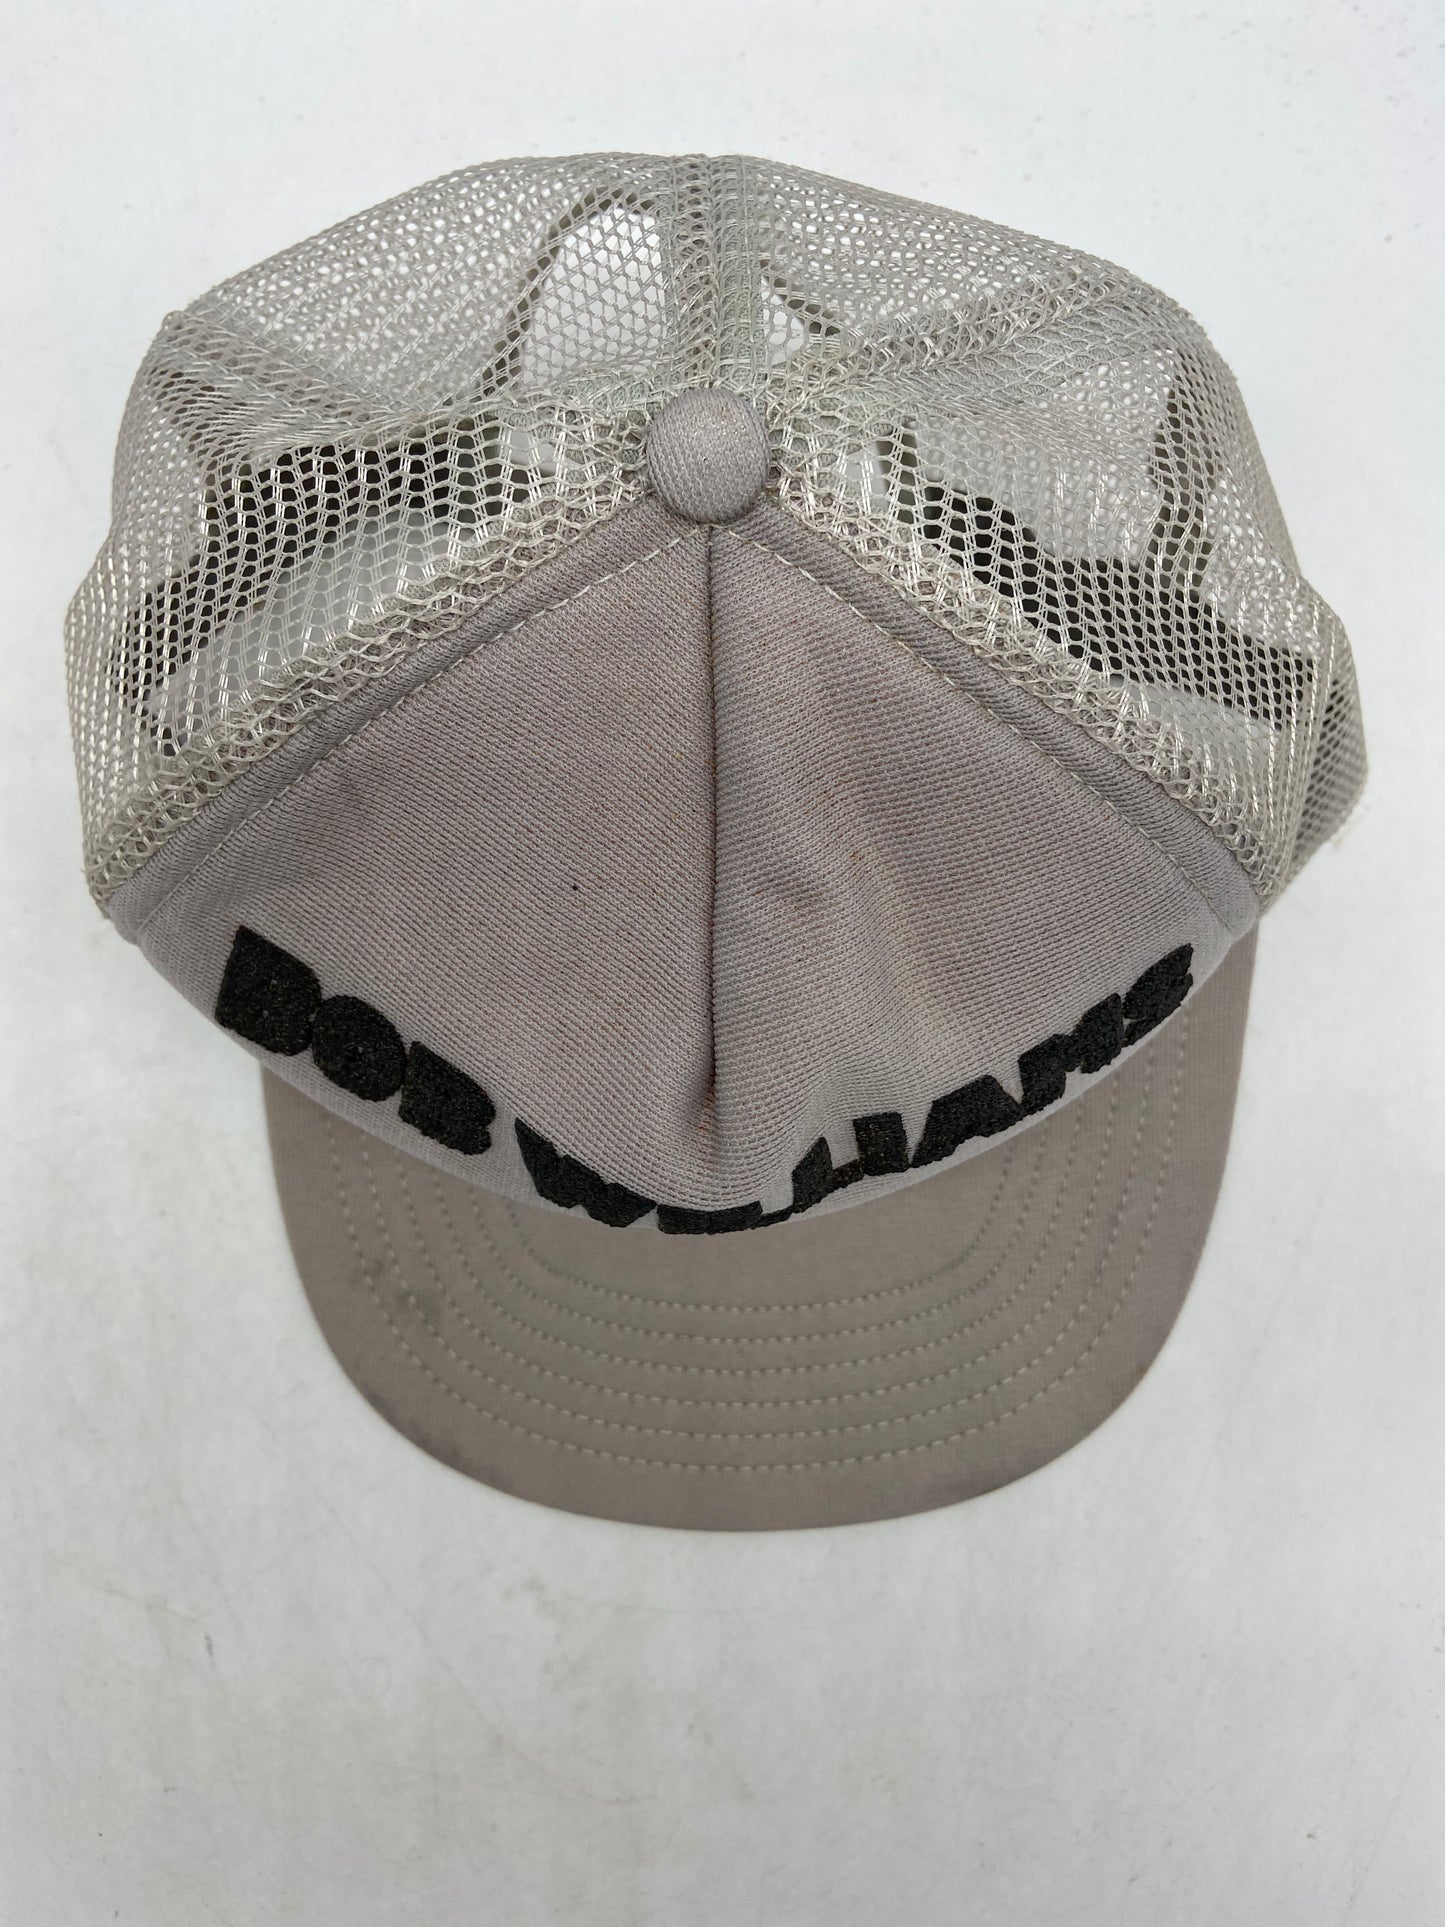 Load image into Gallery viewer, VTG Bob Williams Nashville Lincoln Trucker Hat
